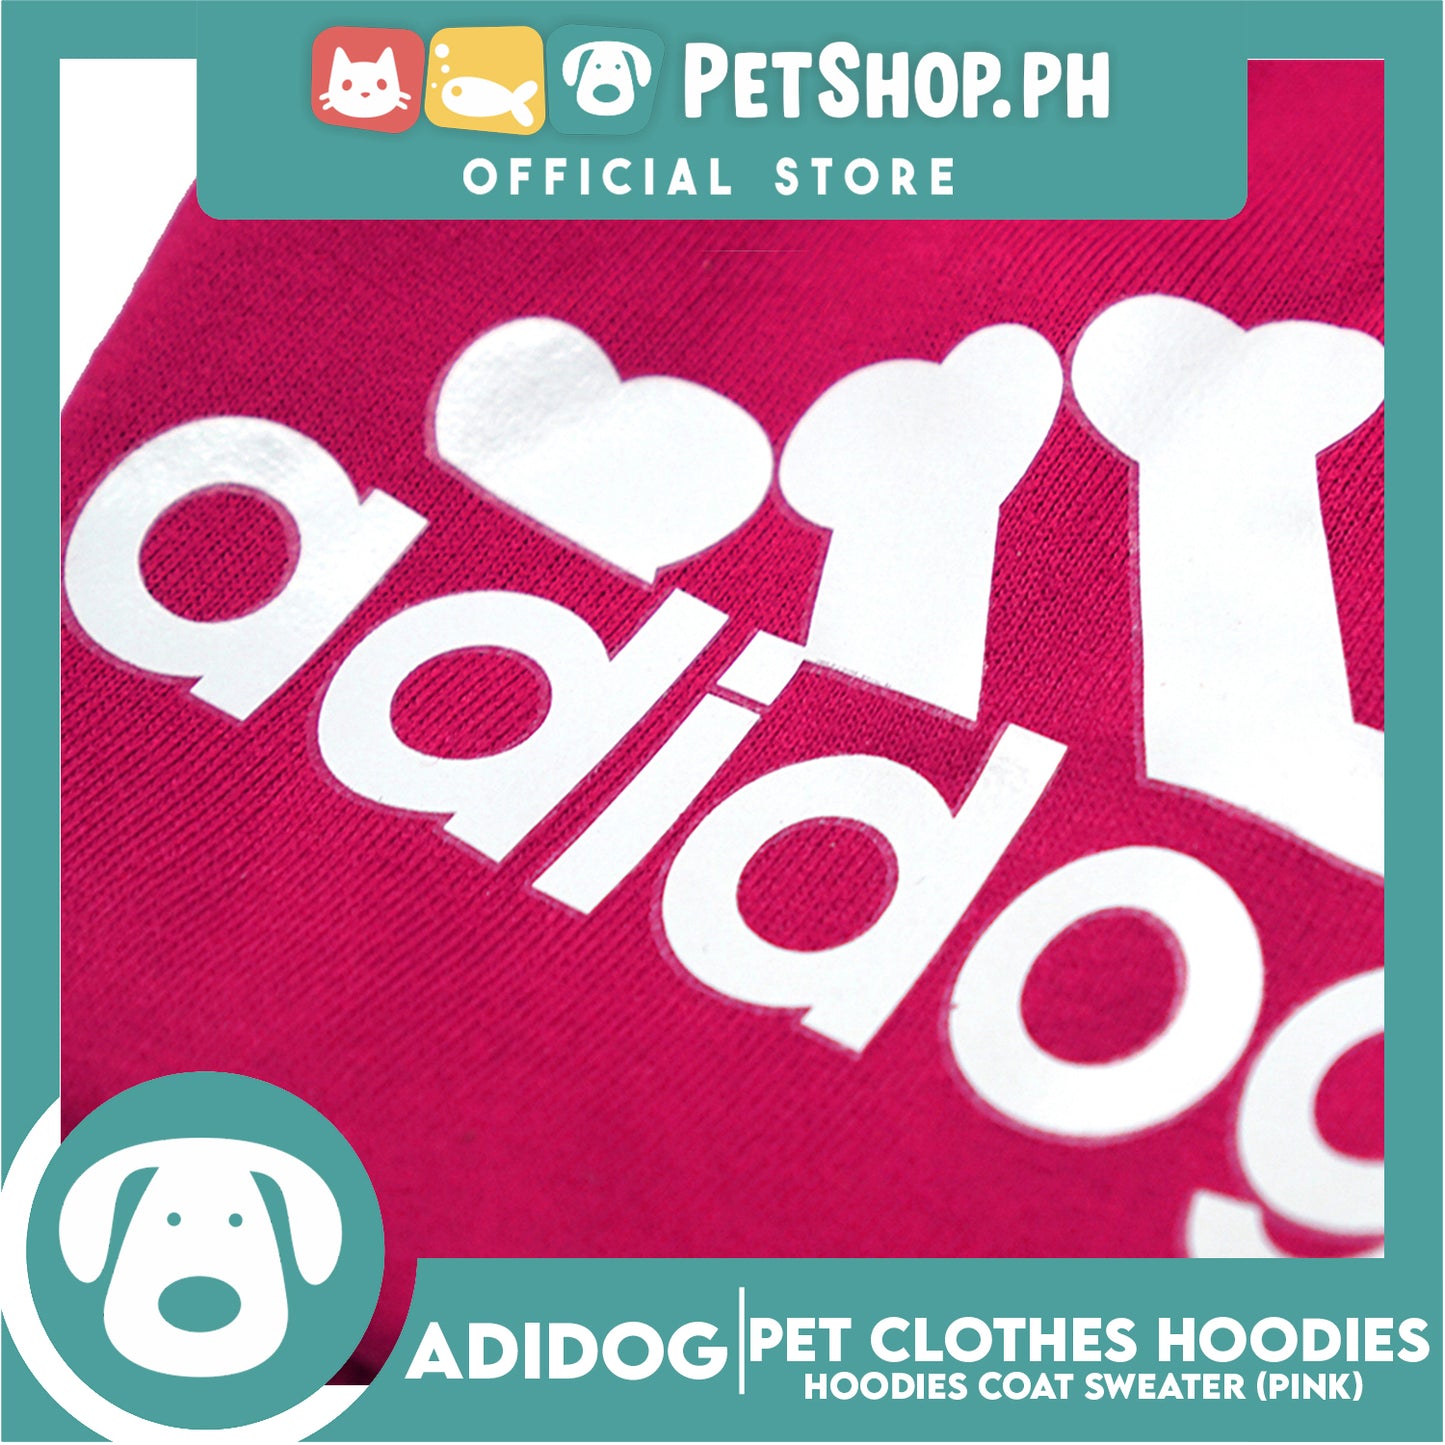 Adidog Pet Clothes Hoodies, Cute Warm Winter Hoodies Coat Sweater (Pink) Small